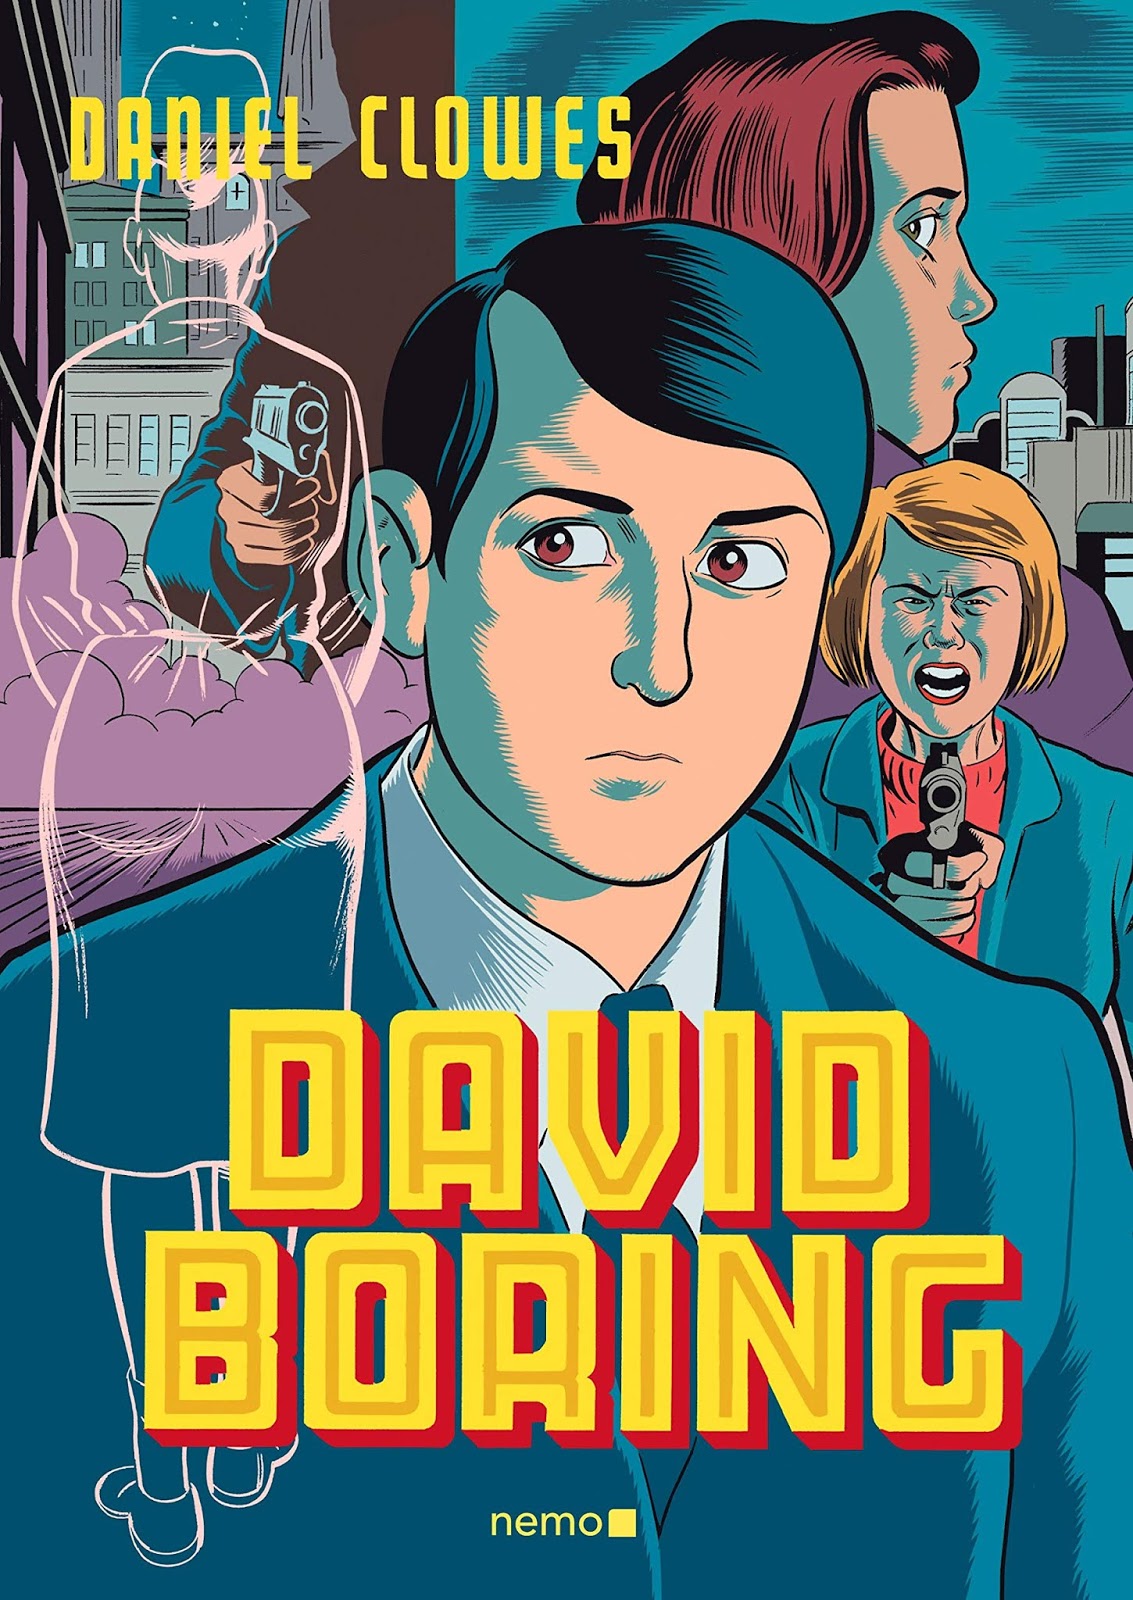 Resenha: "David Boring"